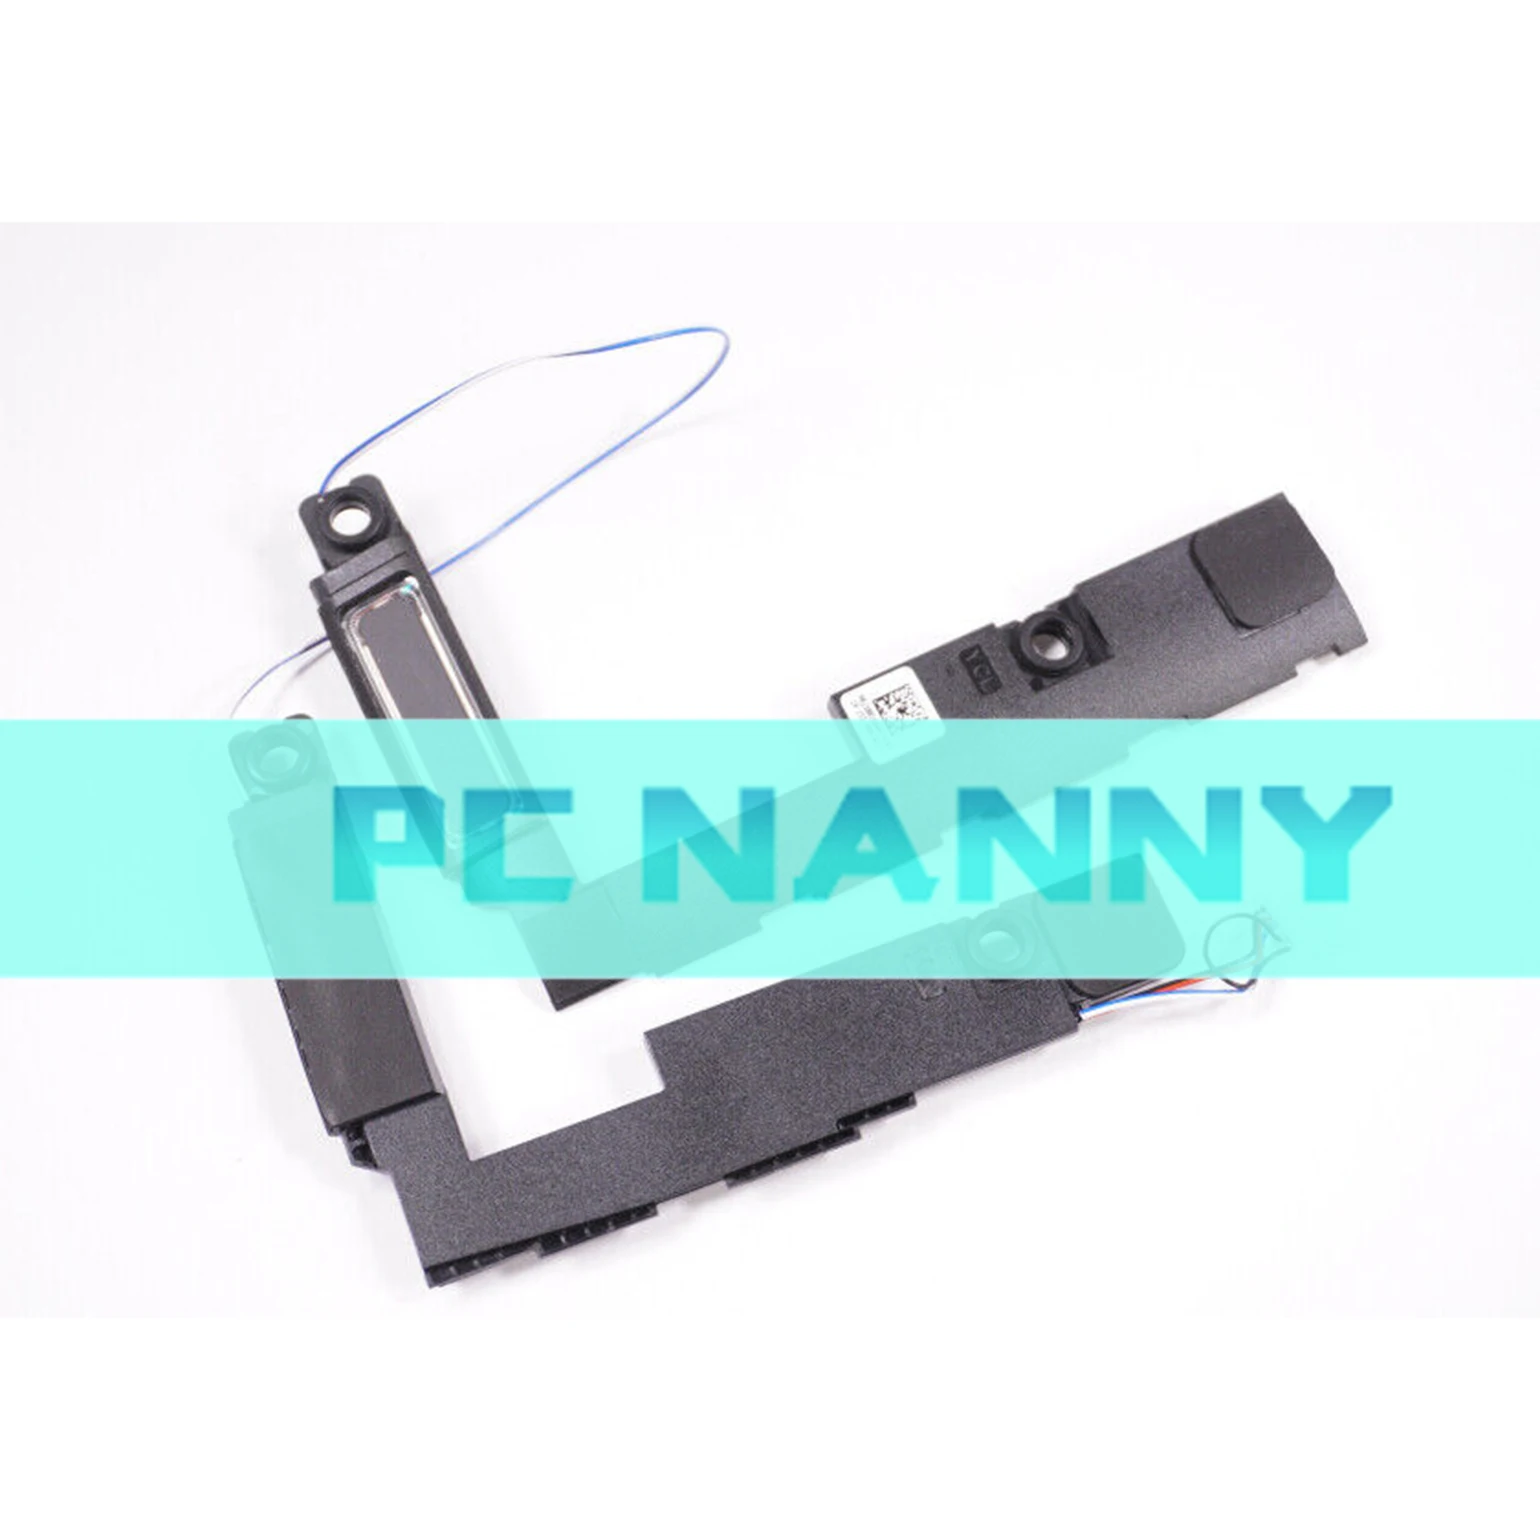 

PCNANNY FOR HP Envy 13-BF0013DX 13-bf Laptop Speaker Set N15680-001